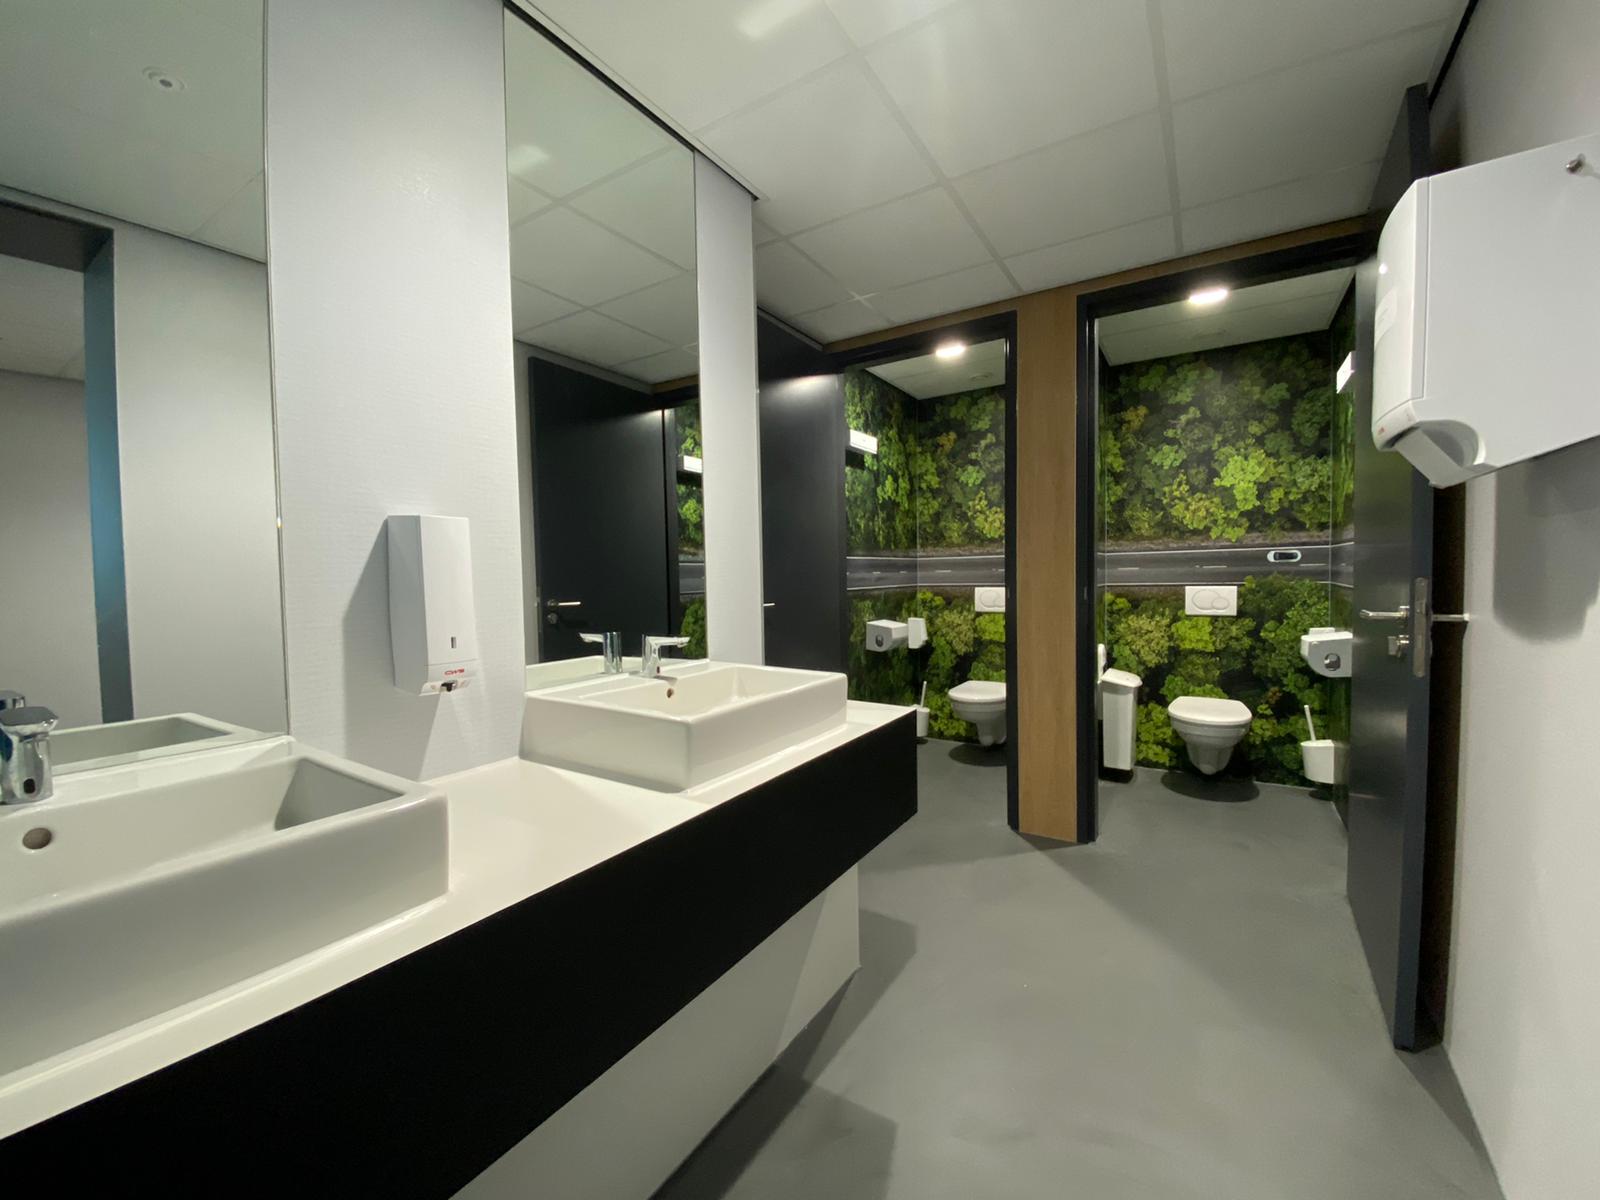 Leaseplan washroom toilet experience